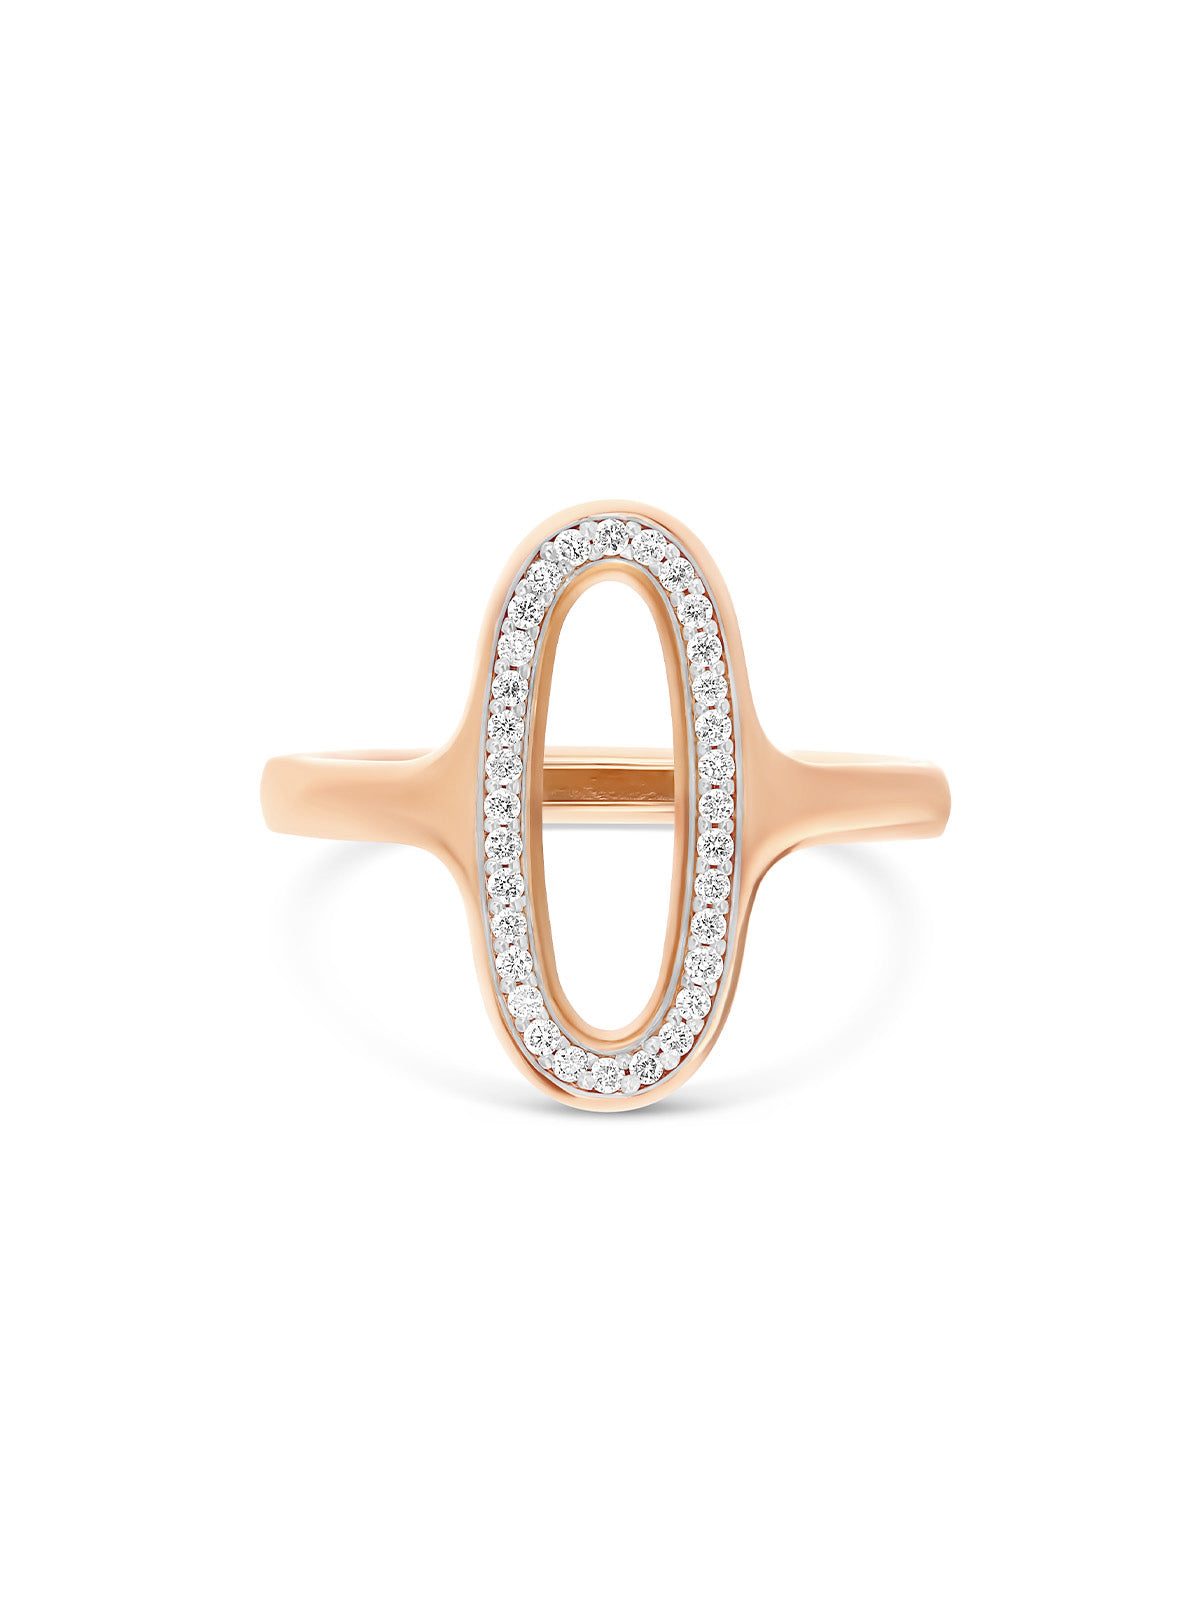 "Libera" rose gold and diamonds oval signet ring